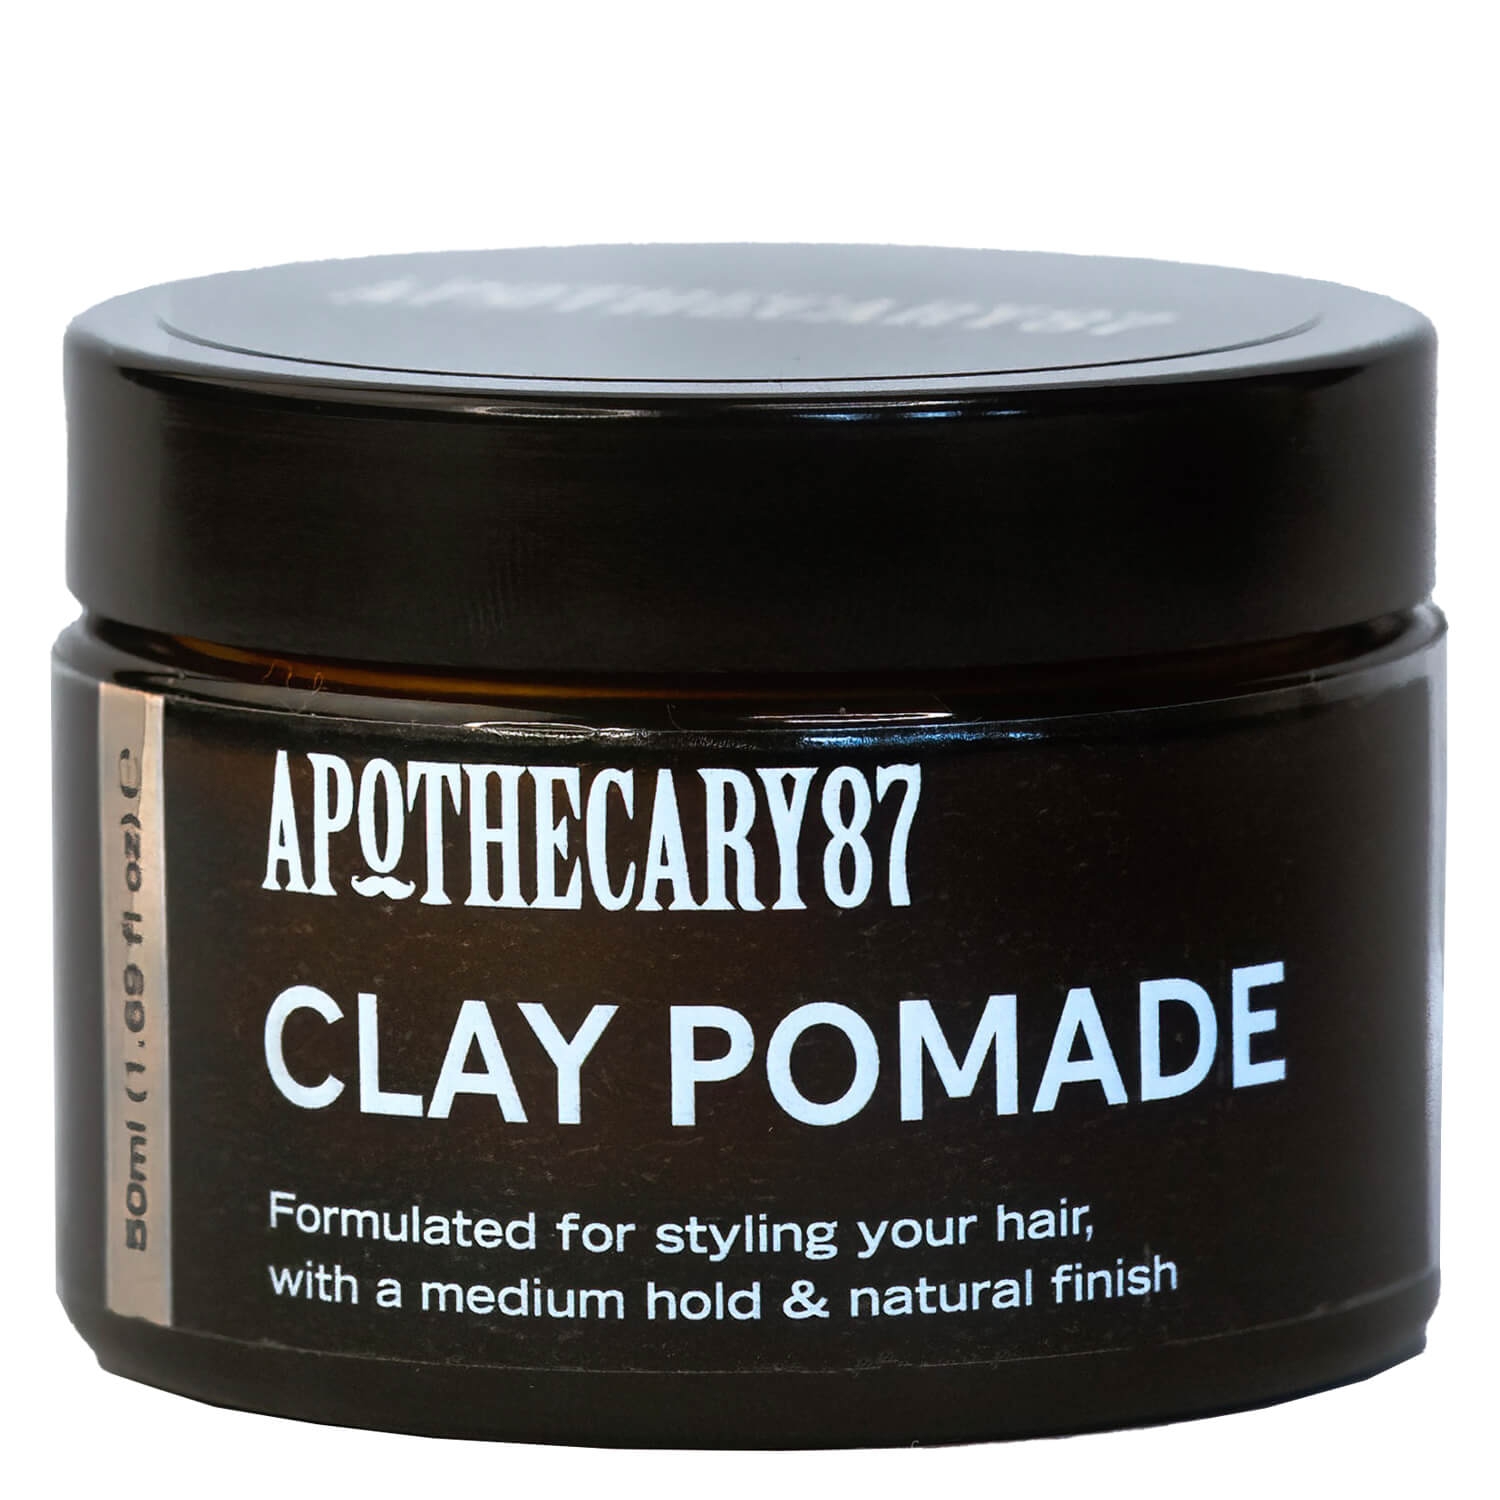 Image du produit de Apothecary87 Grooming - Clay Pomade Vanilla & Mango